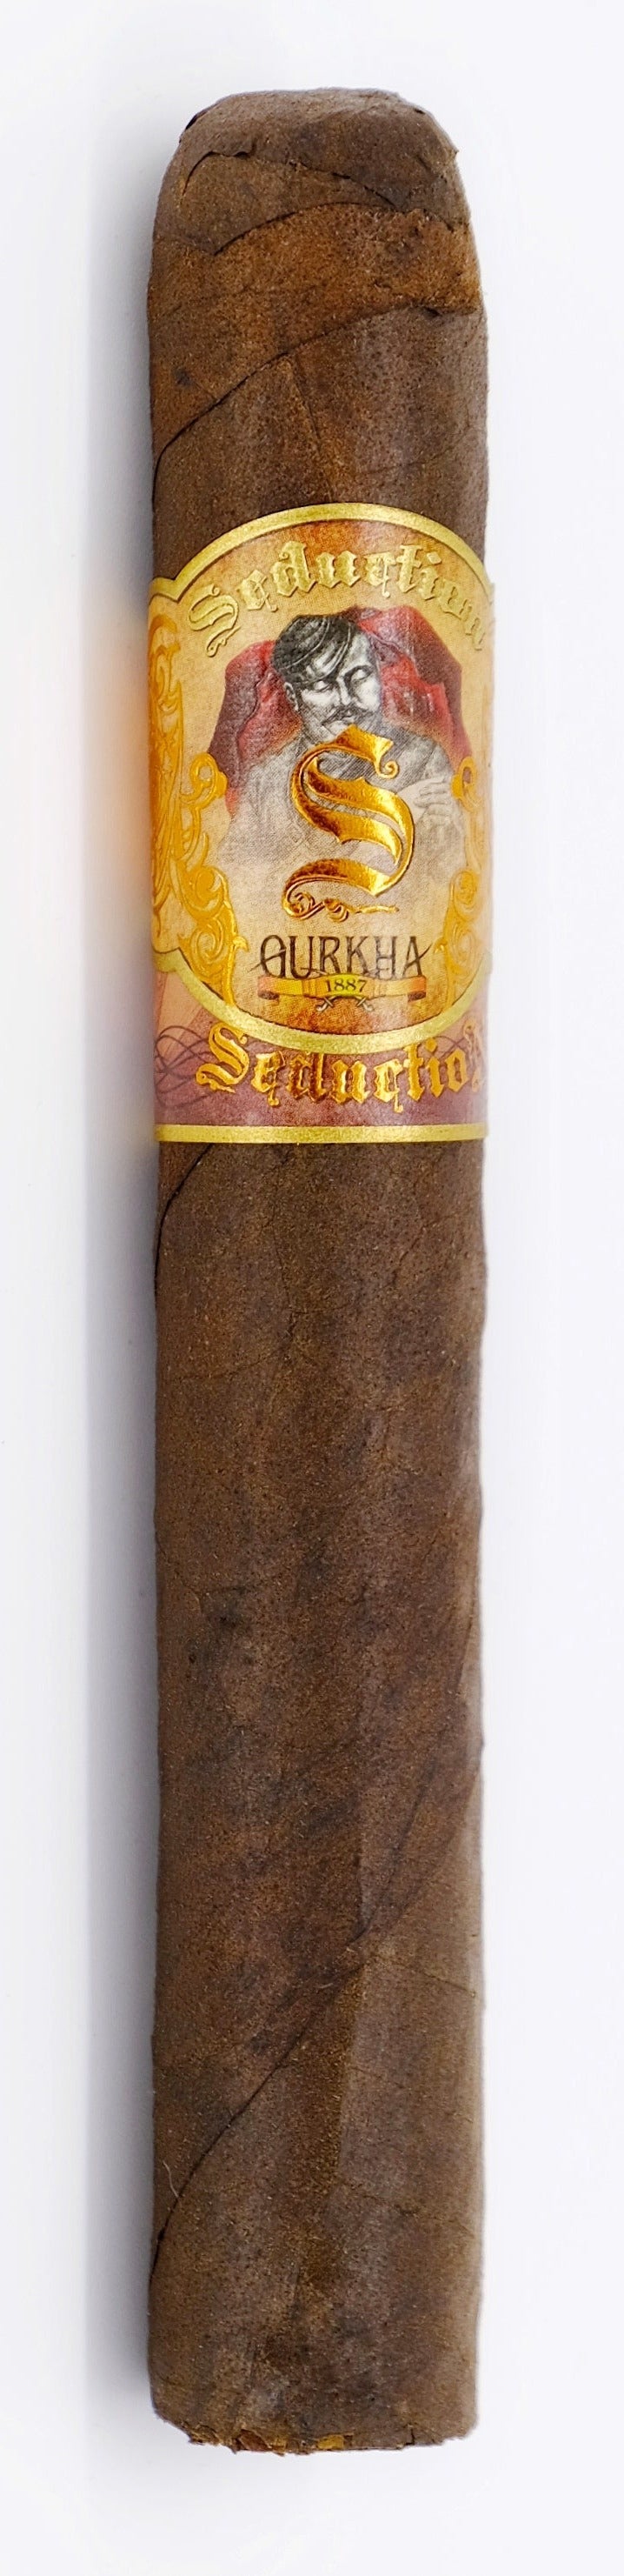 Gurkha Seduction Toro Cigar_einzelne Zigarre